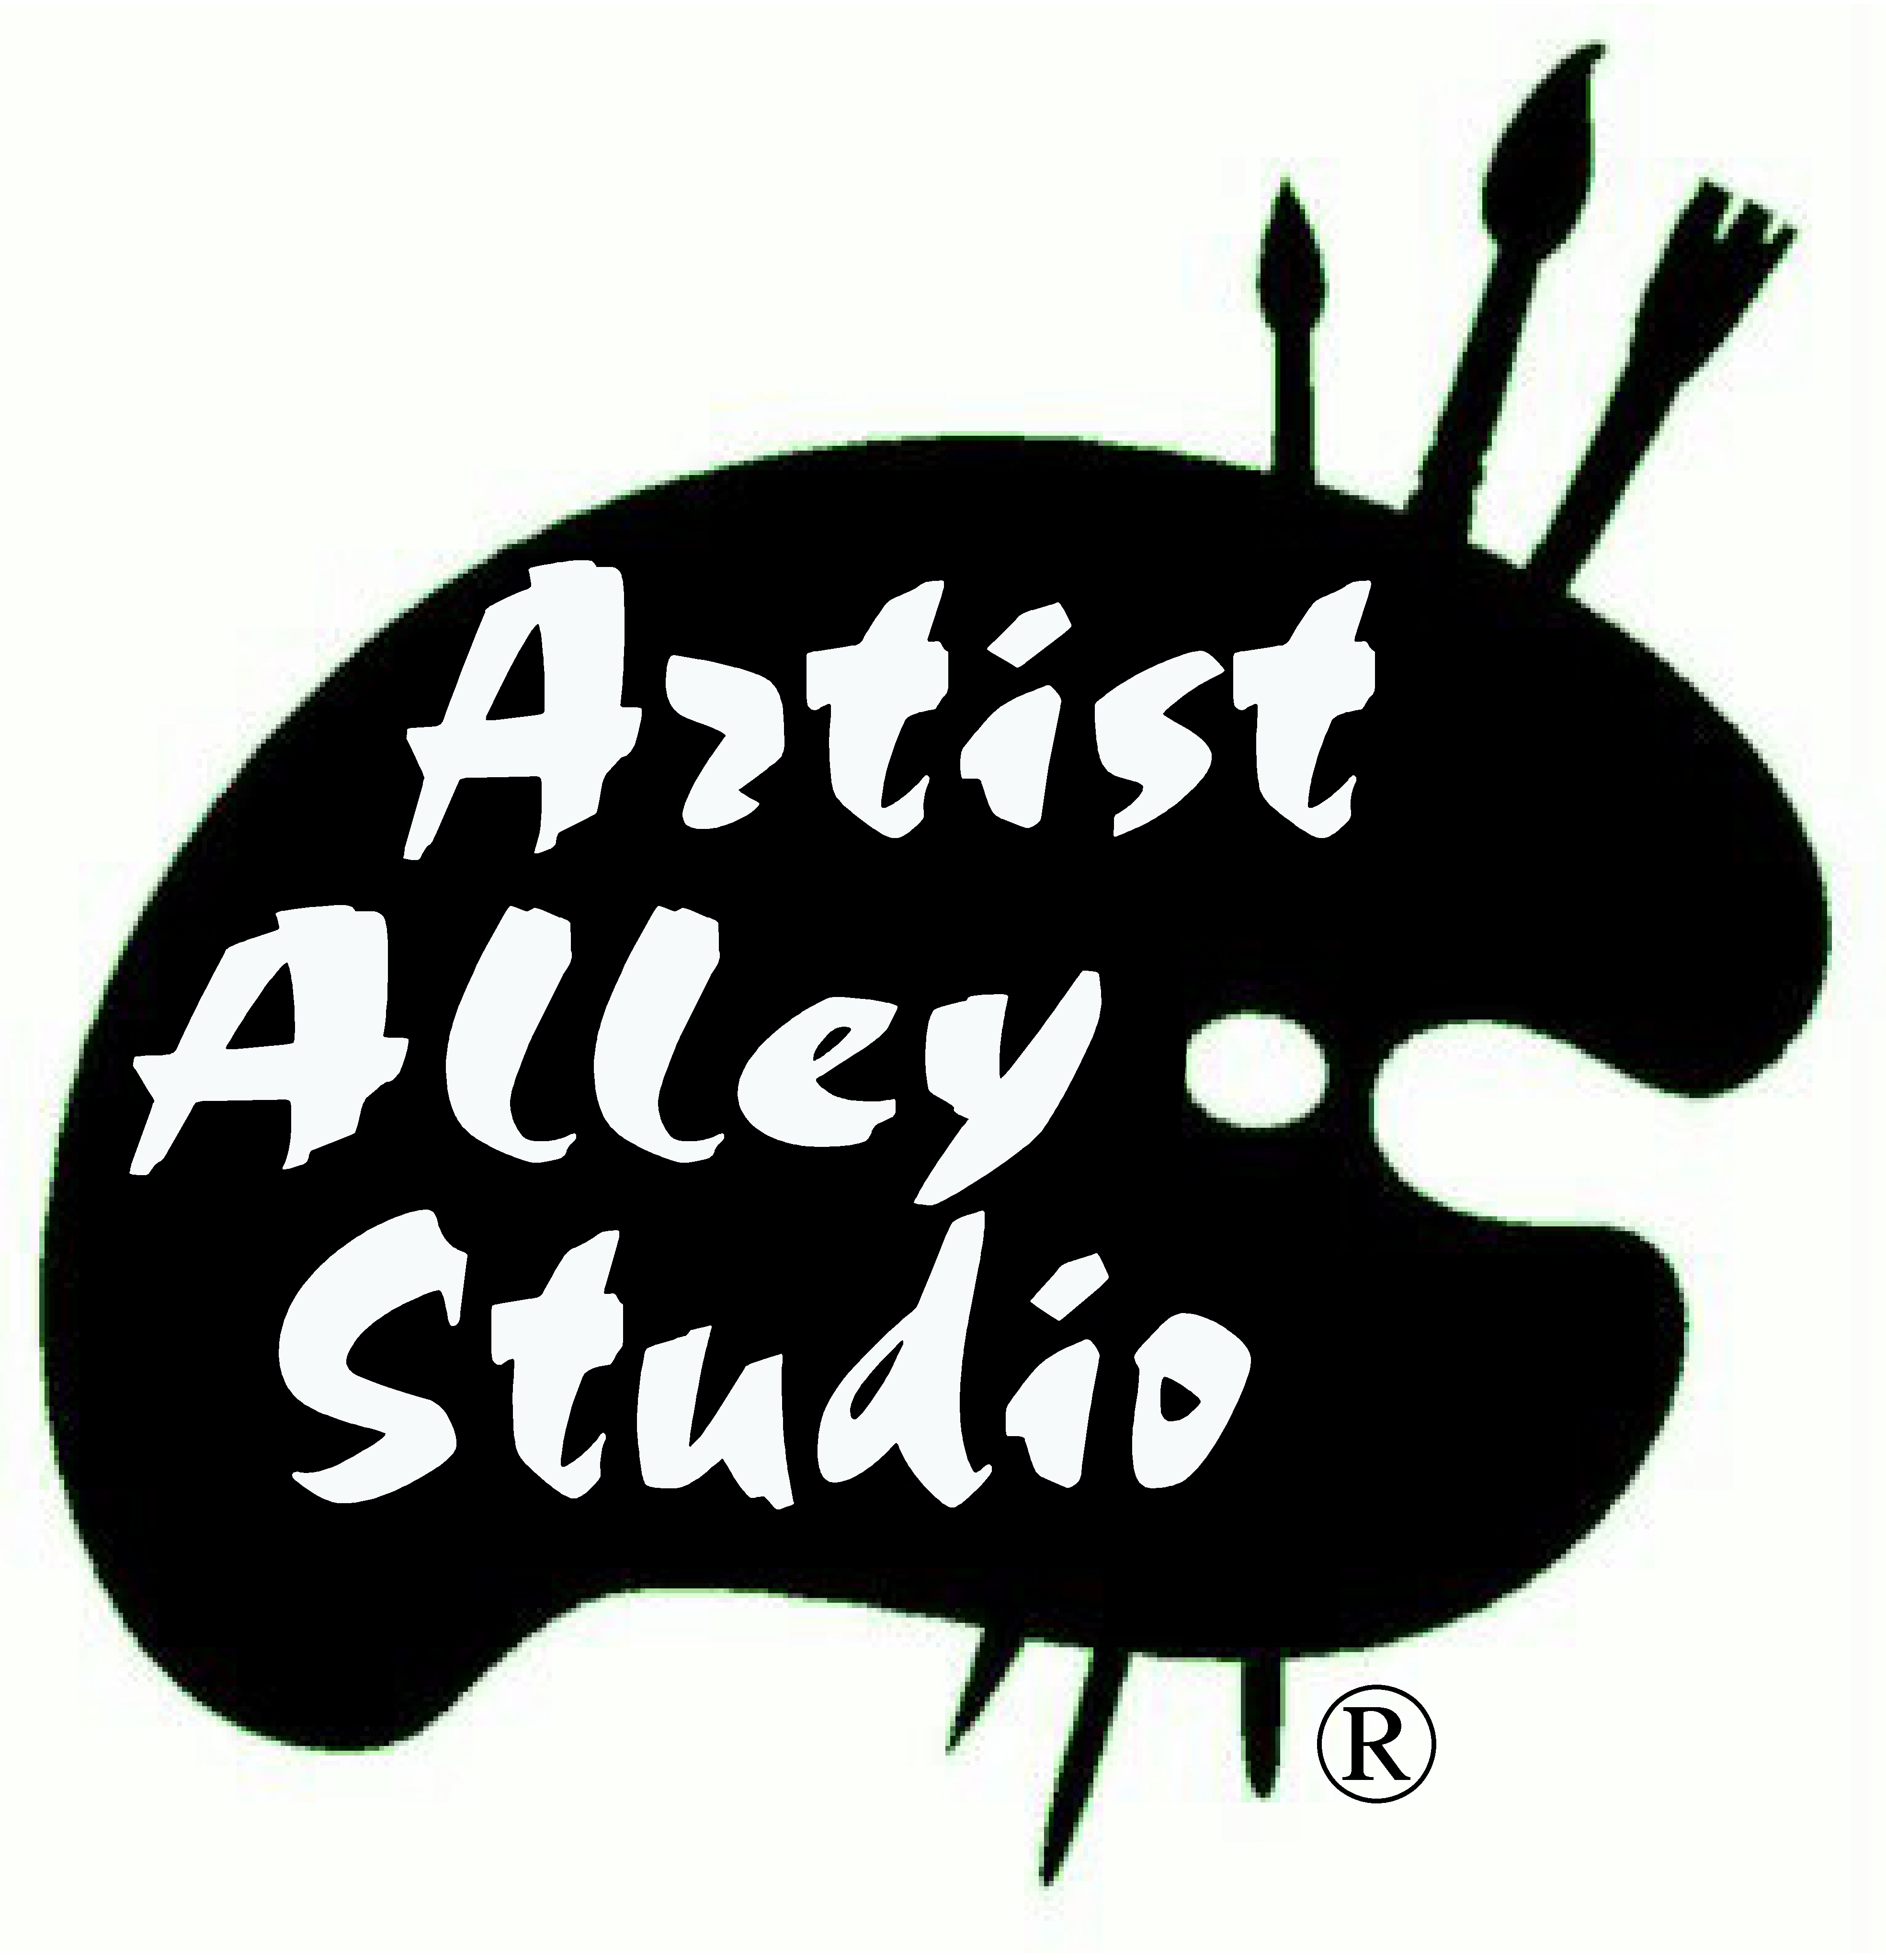 Artist Alley Studio